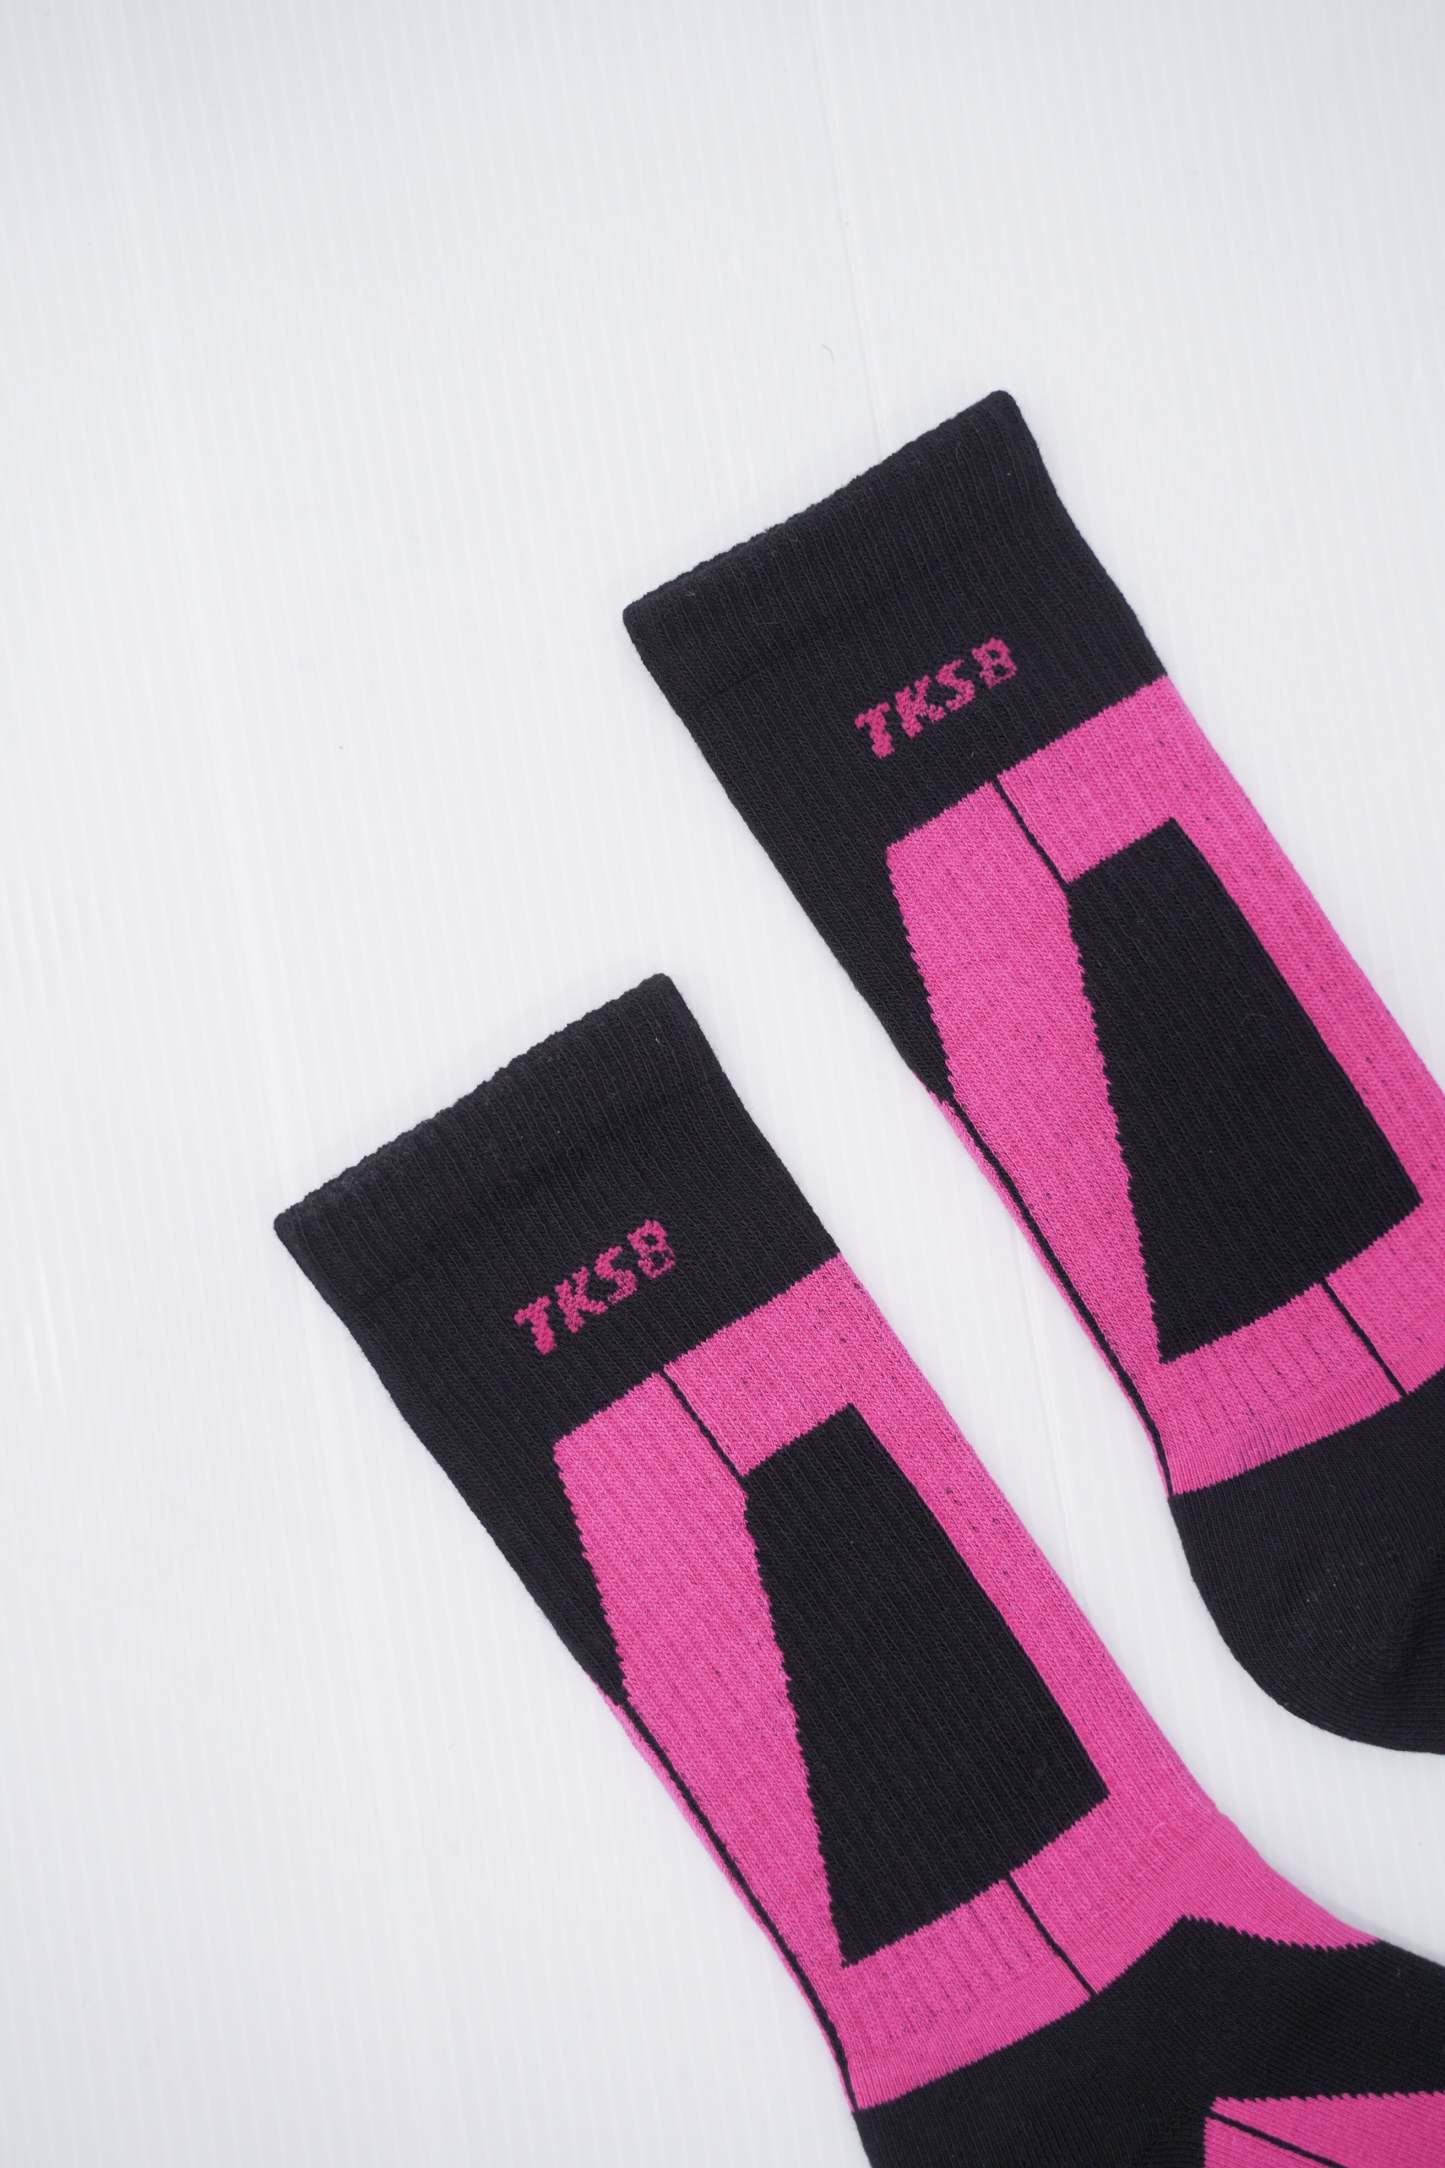 TKSB - Black/Pink TV Socks